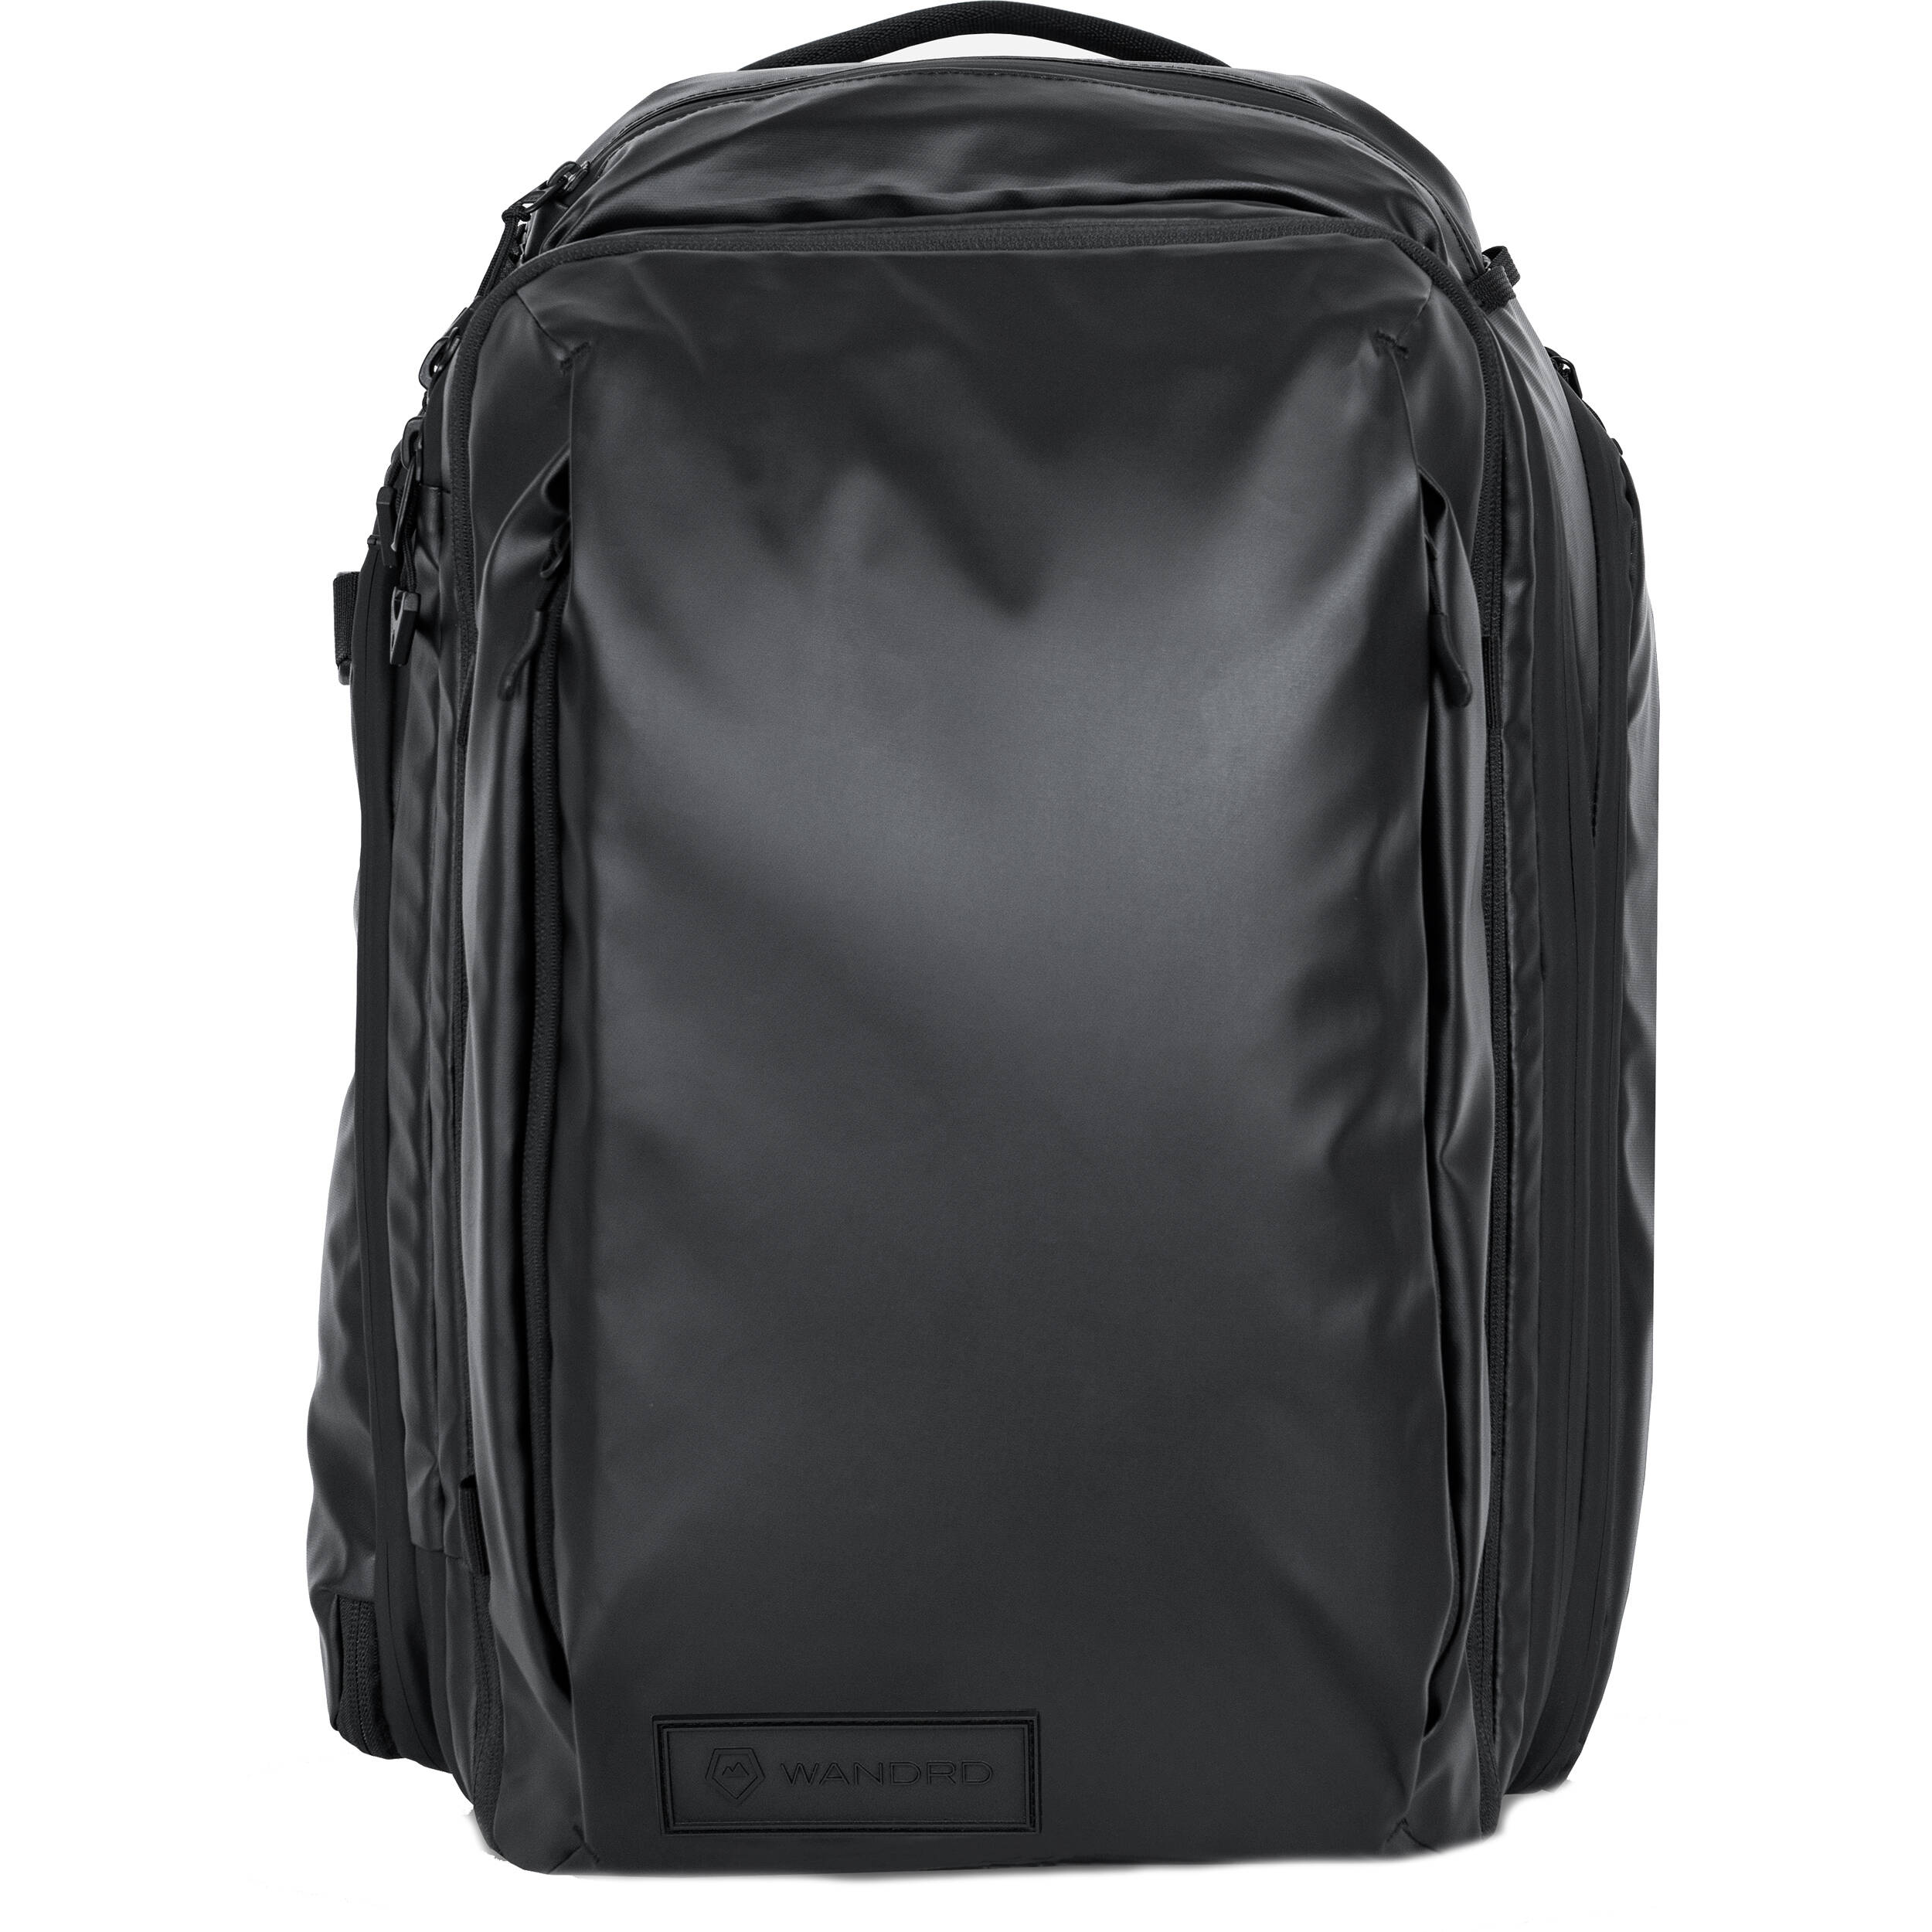 WANDRD Transit Travel Backpack - 45L - Black